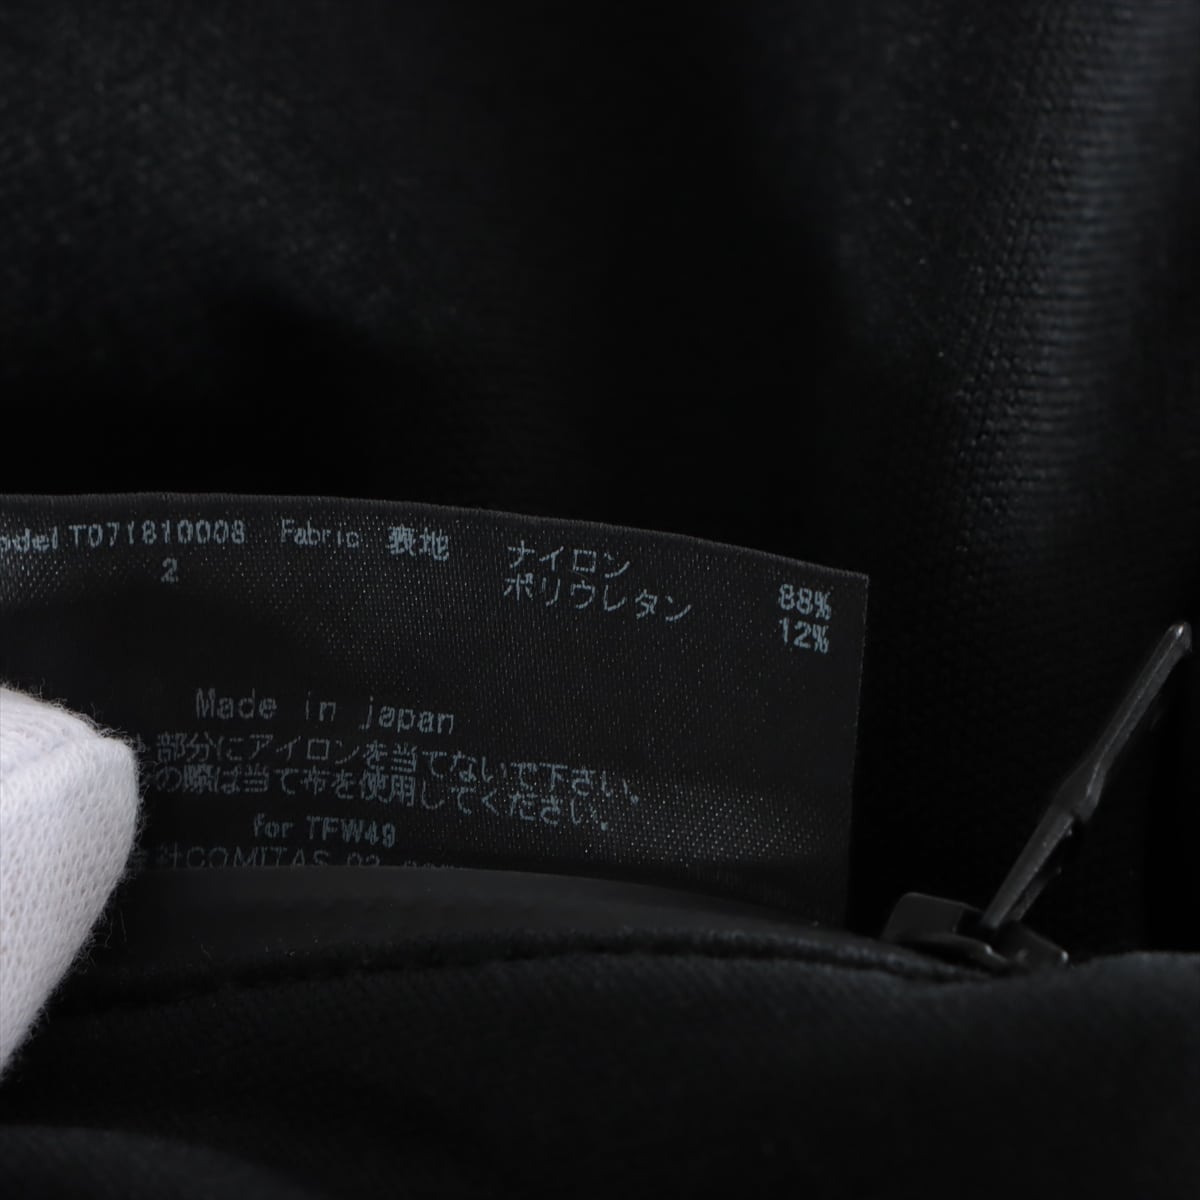 TFW49 Nylon x polyurethane Sweatpants 2 Men's Black